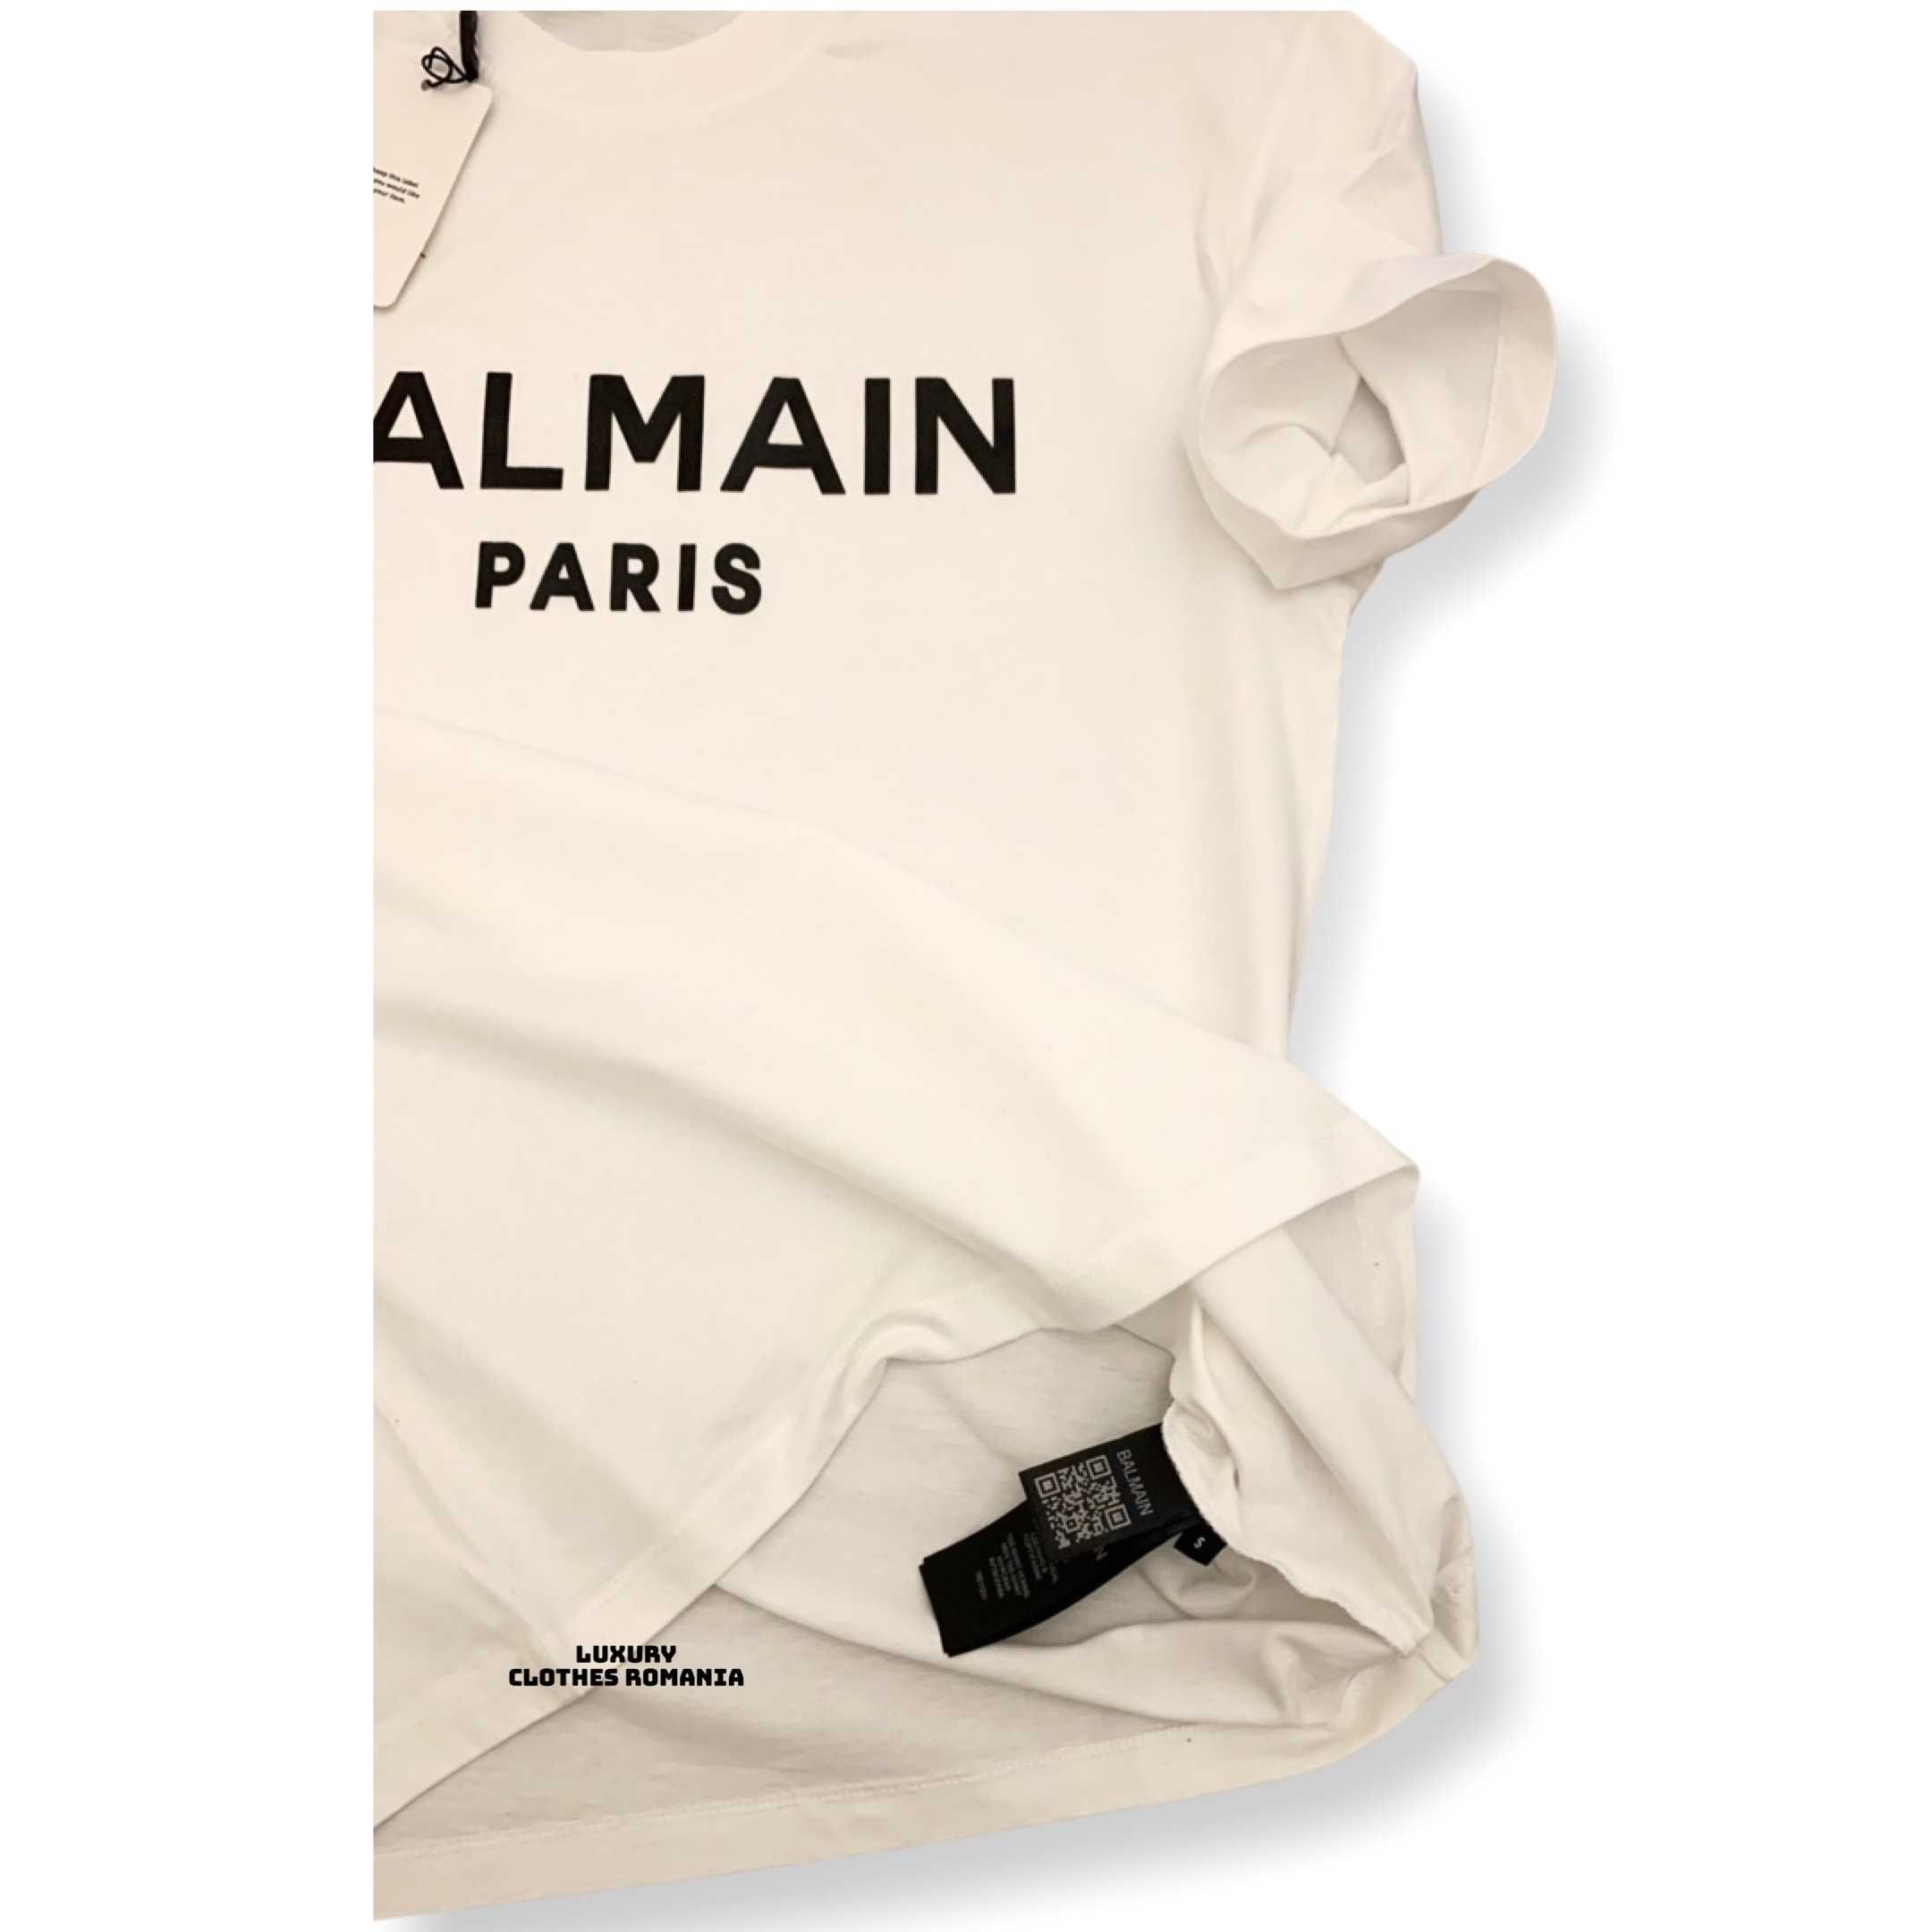 Tricou Balmain Paris flocked logo T-shirt disponibil pe negru&alb